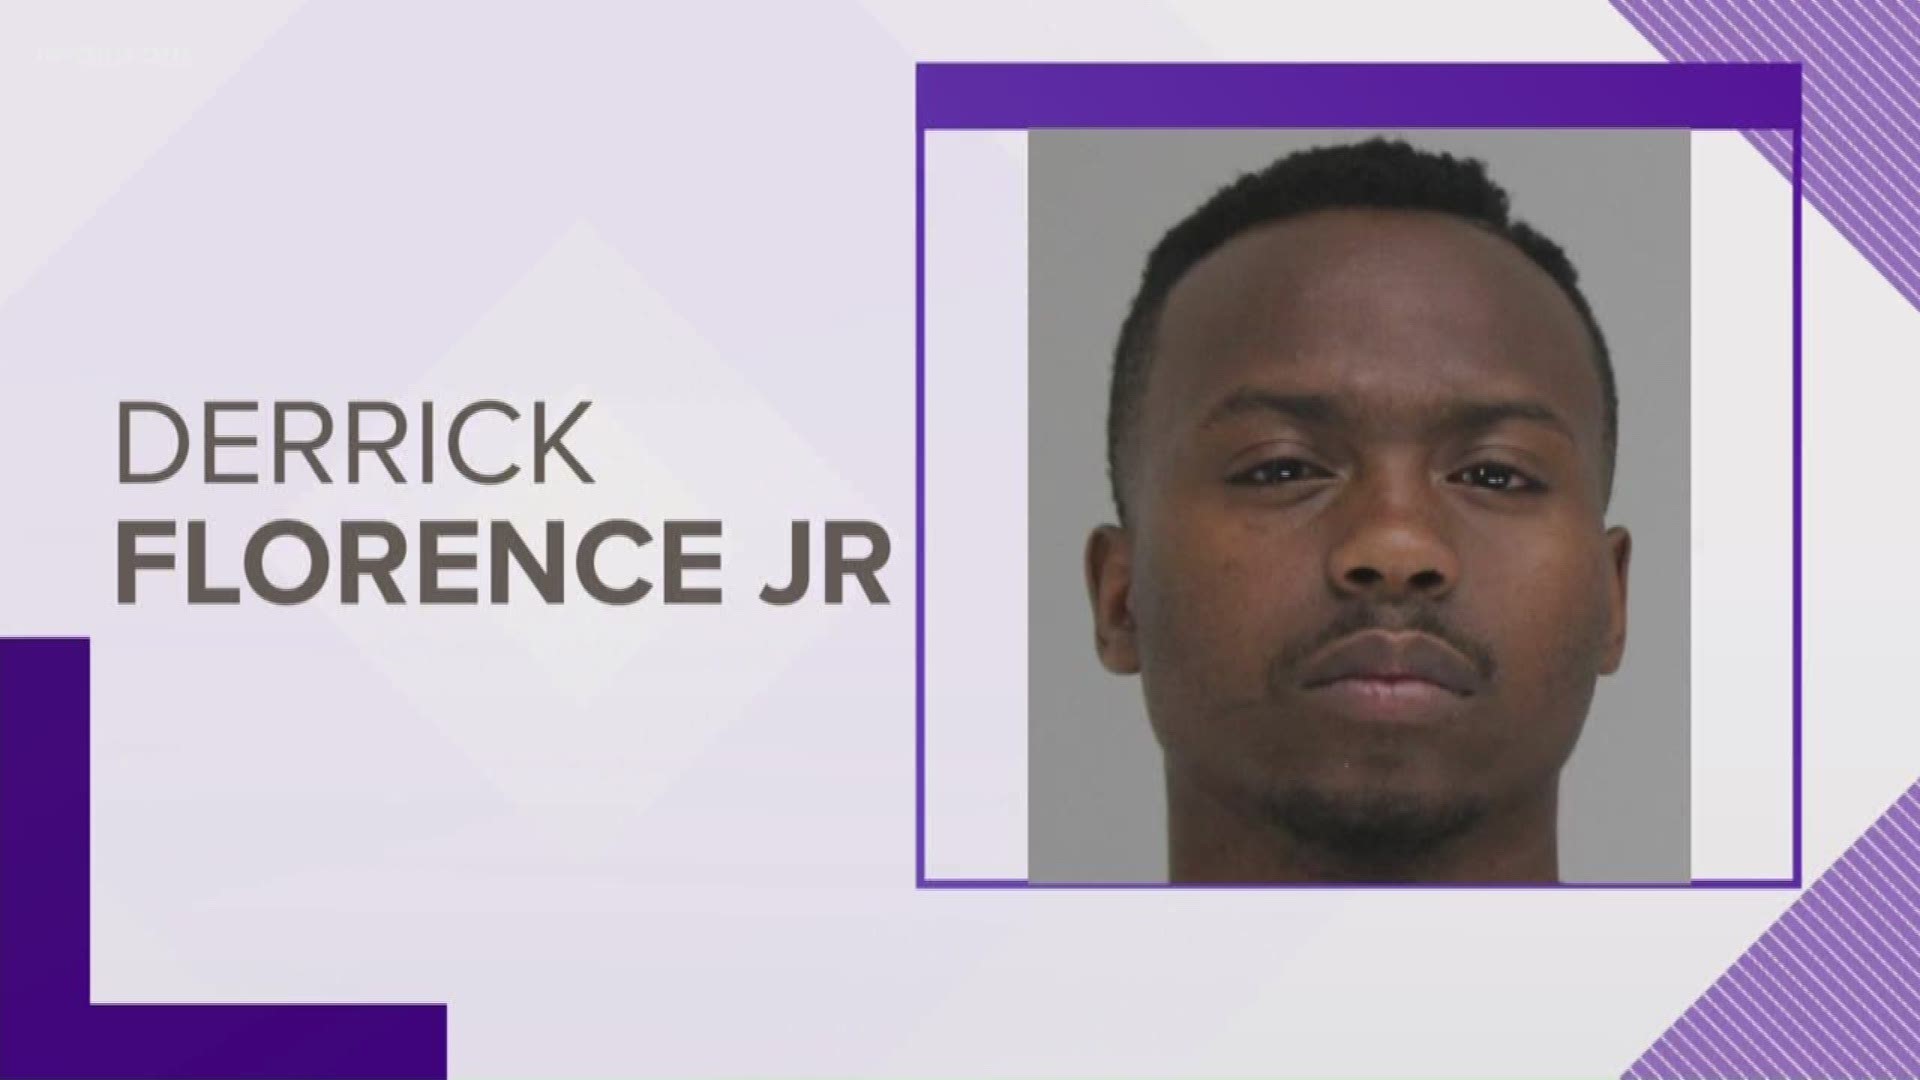 Derrick Florence, Jr. has already been arrested.